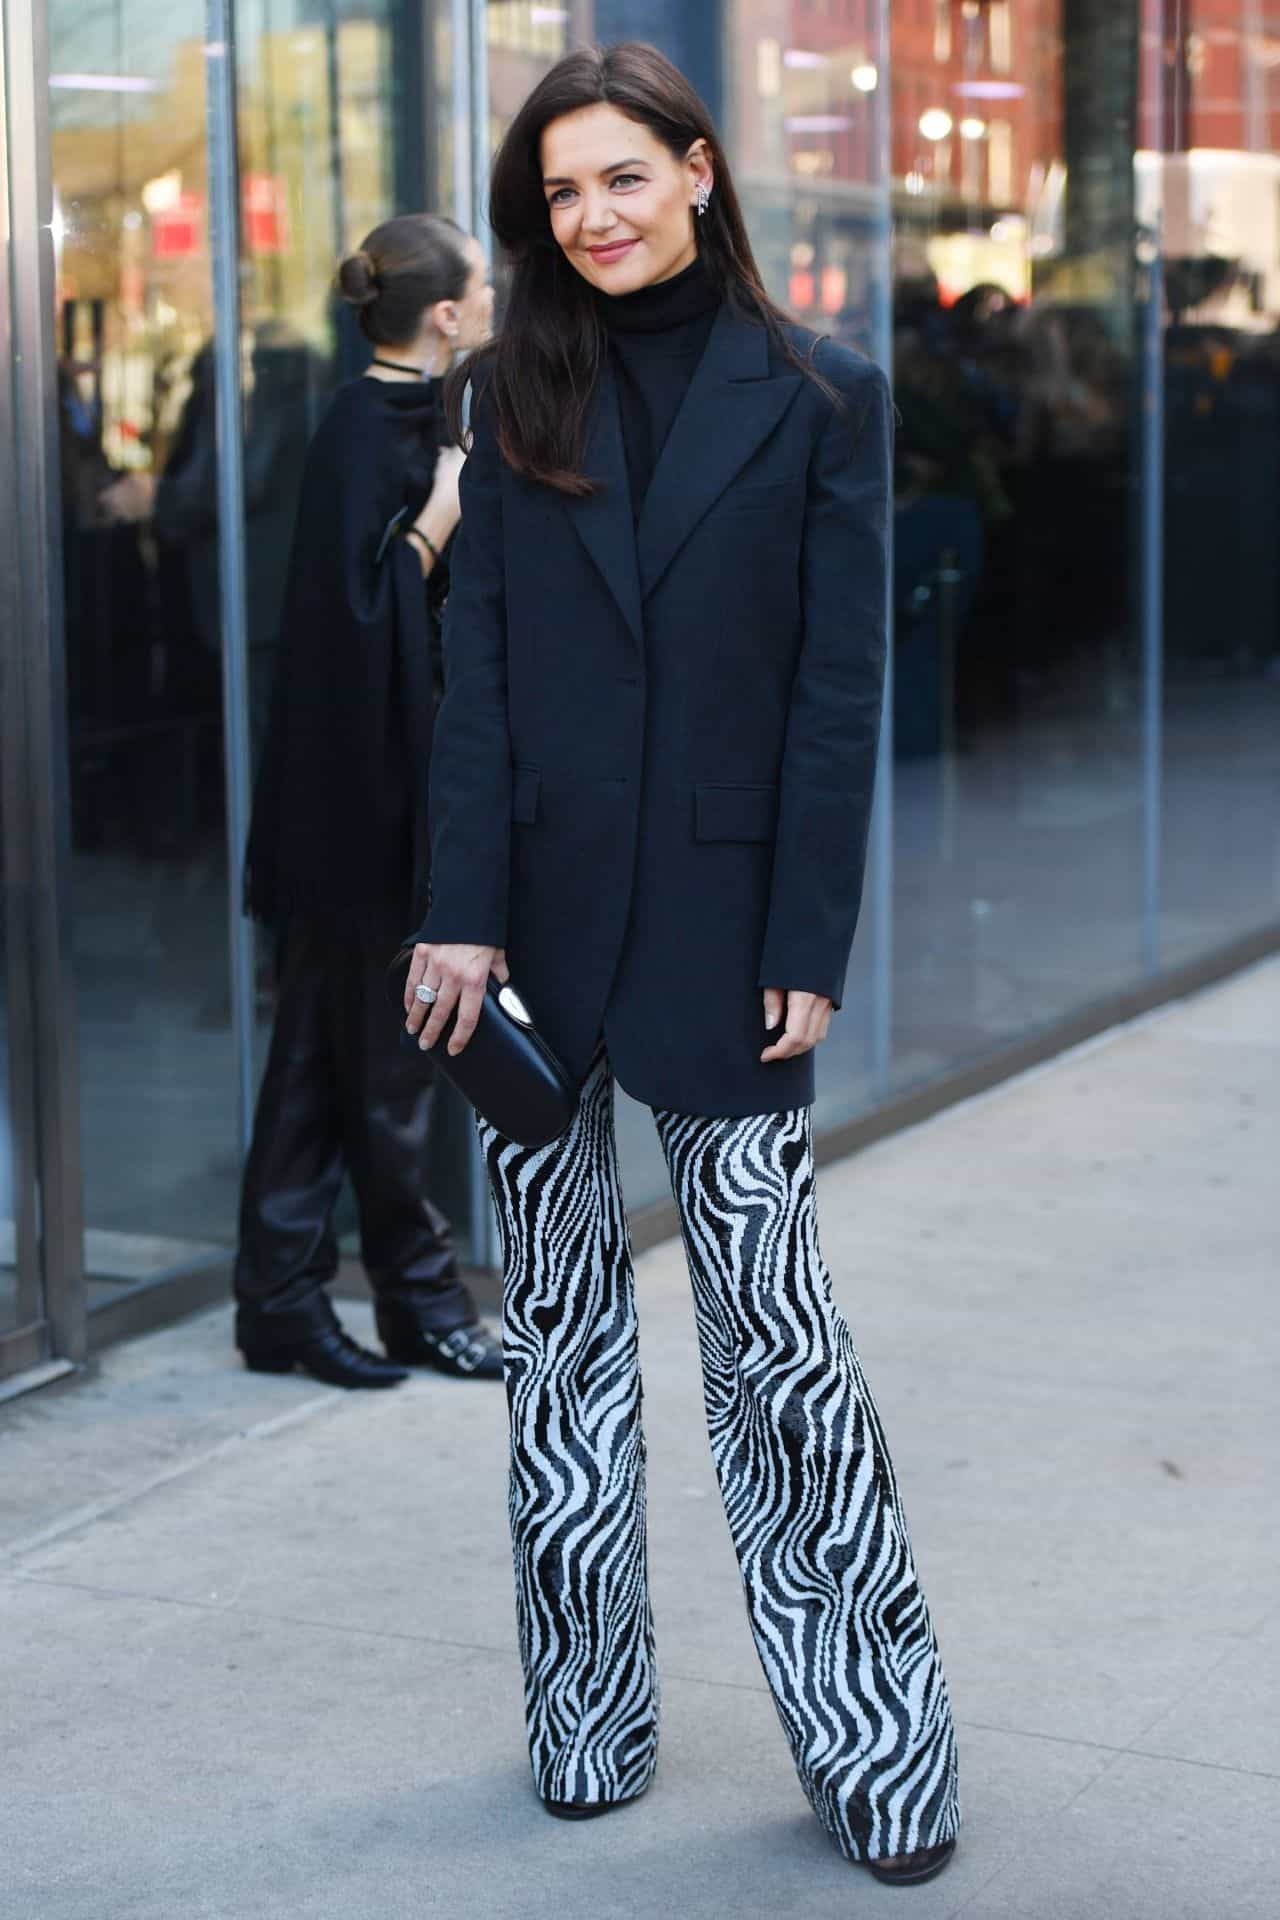 Katie Holmes Stuns in Zebra-Print Pants at Michael Kors NYFW Show